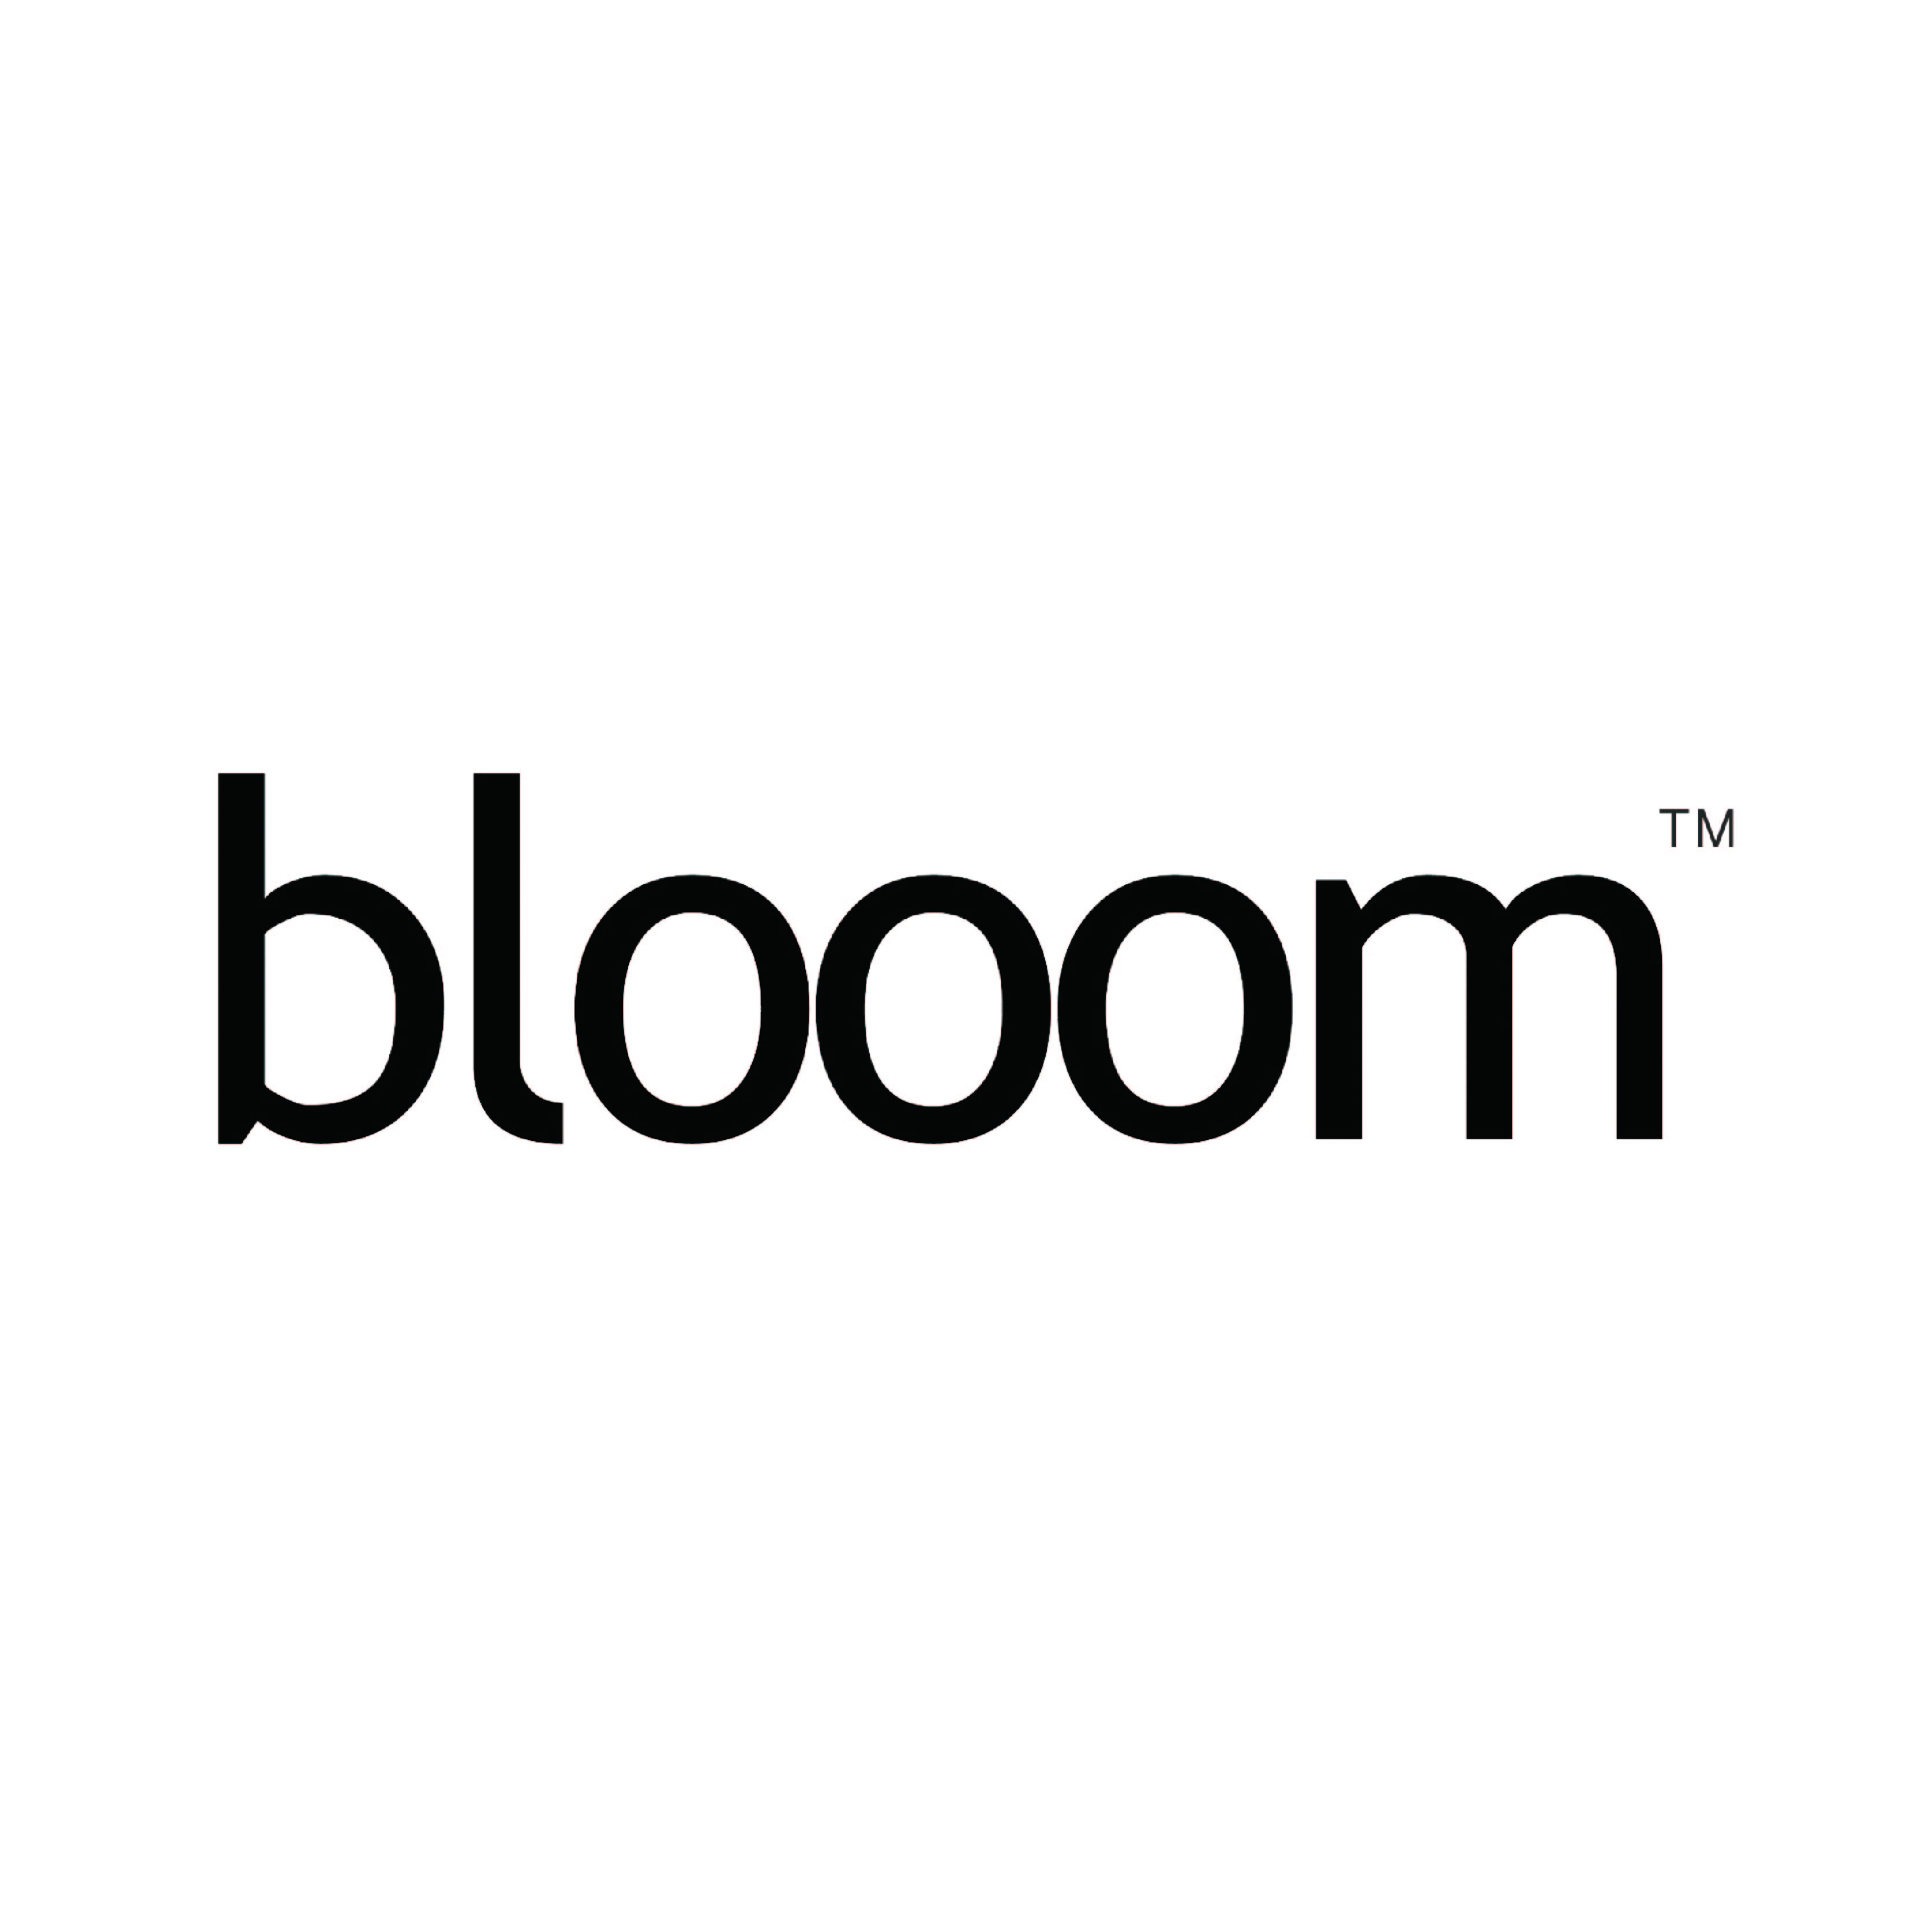 blooom